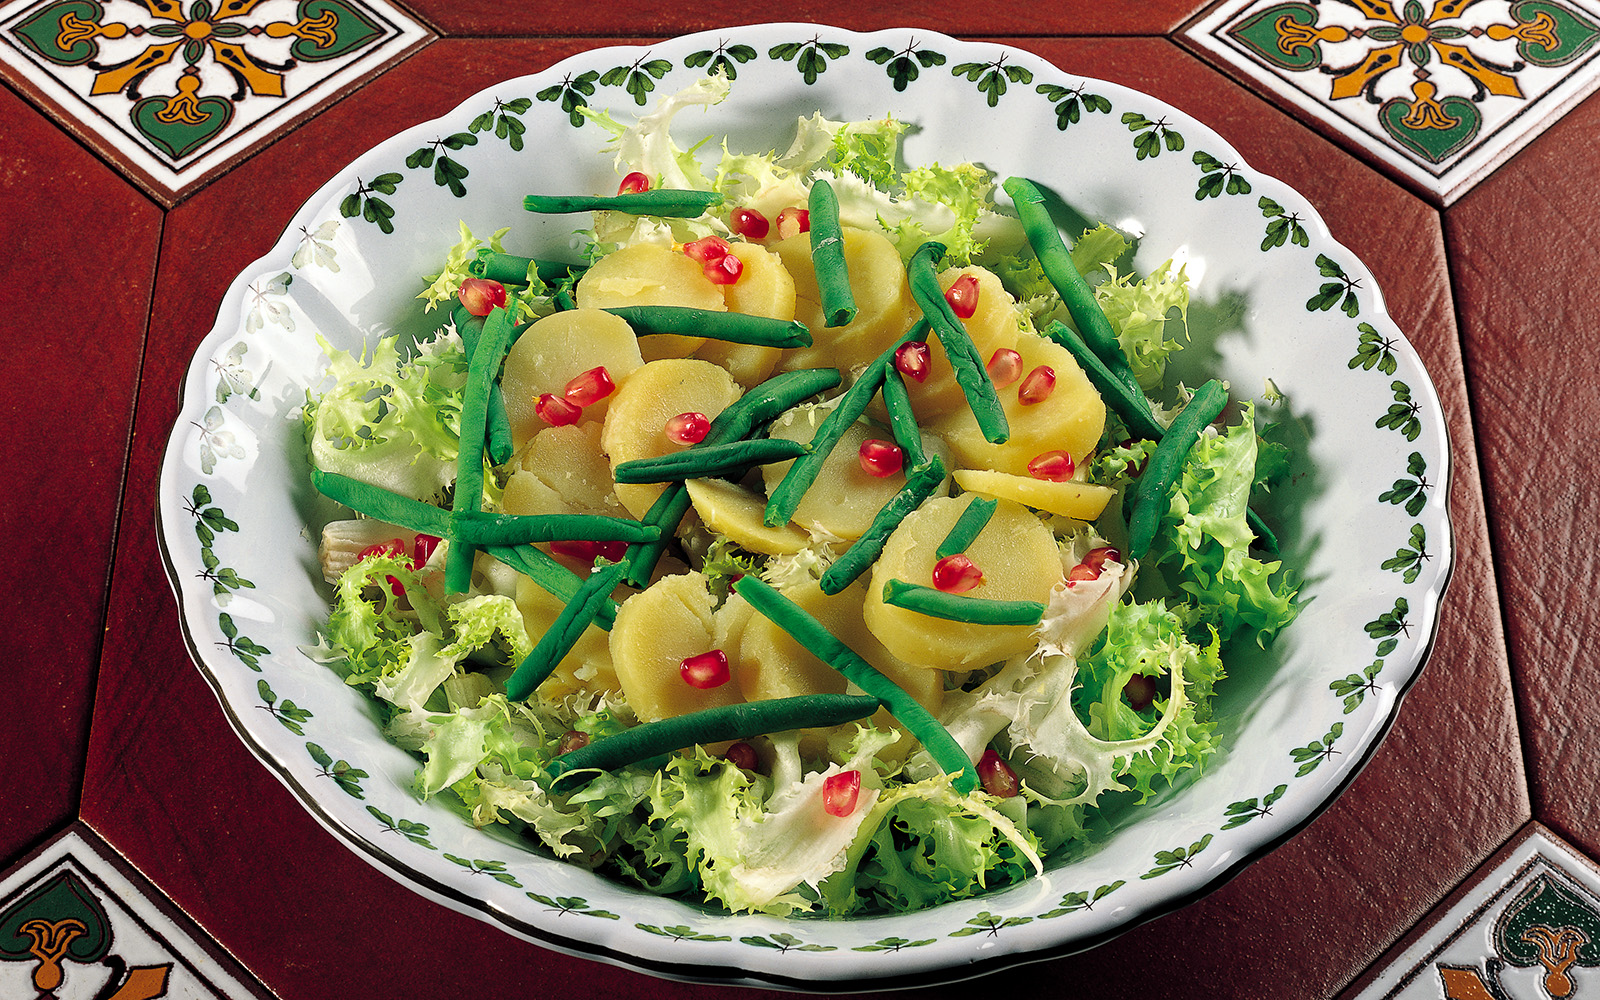 Mixed salad with pomegranate